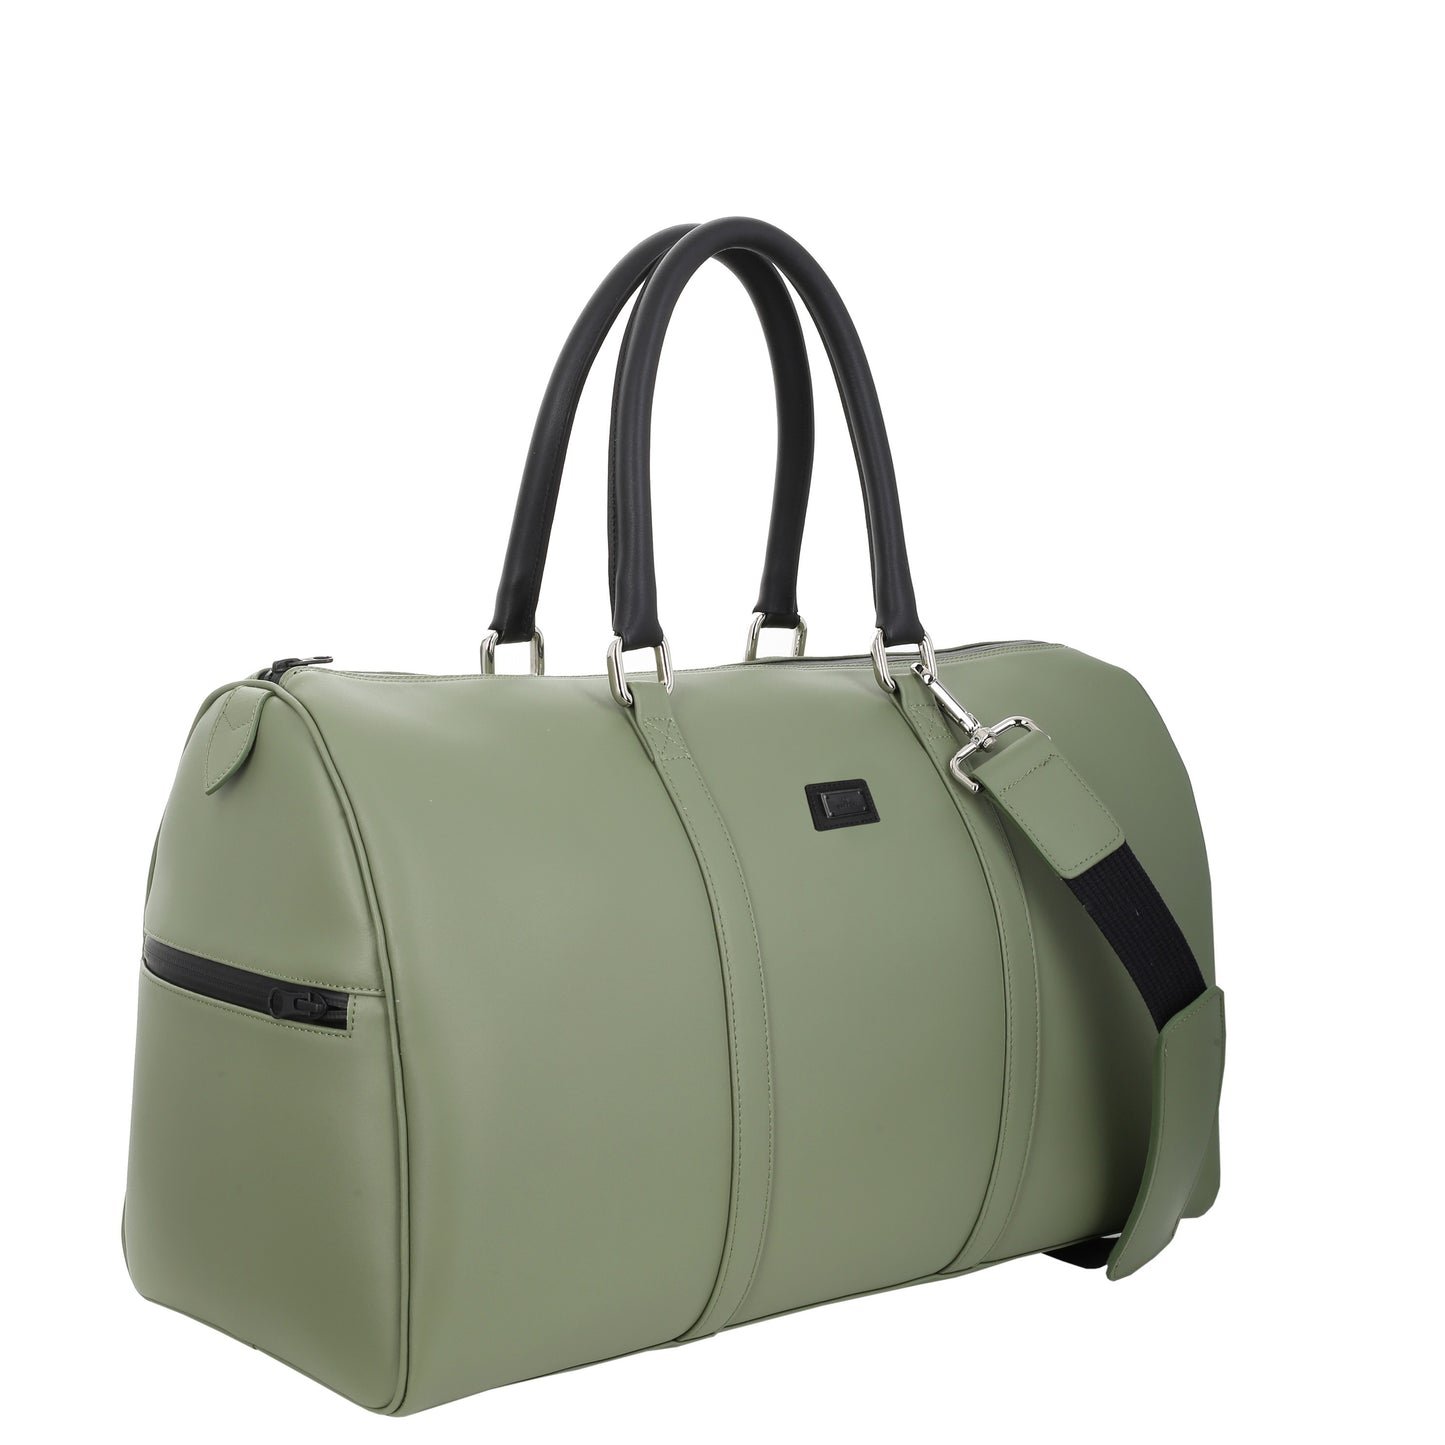 Artico OLIVE leather travel bag